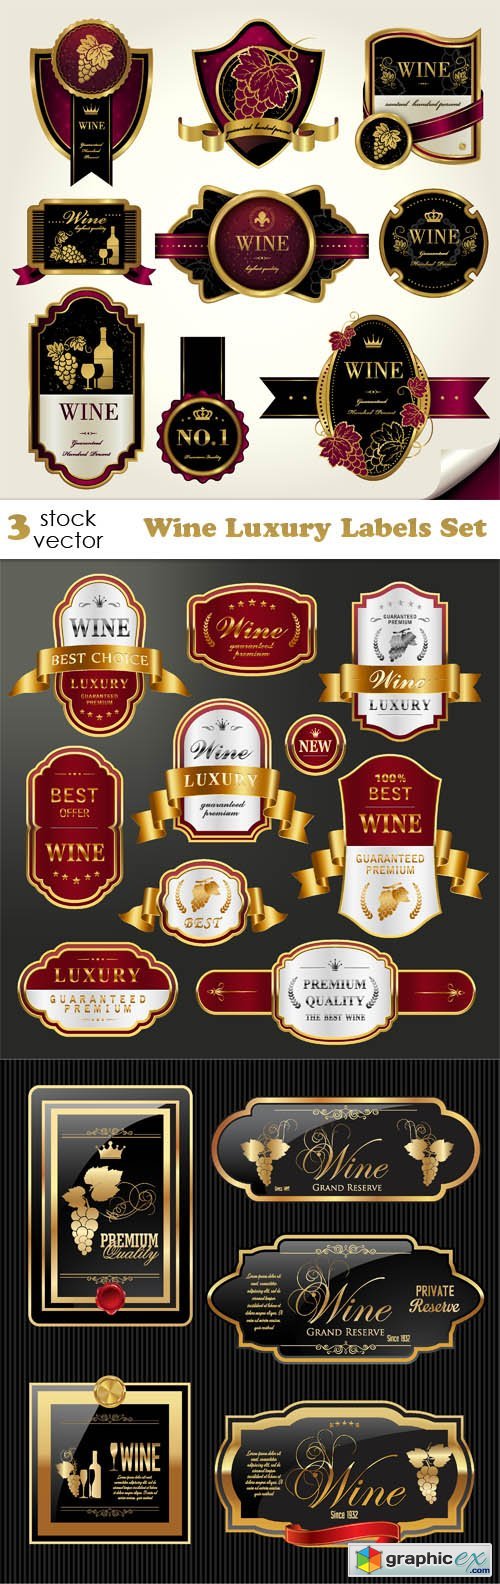 Wine Luxury Labels Set